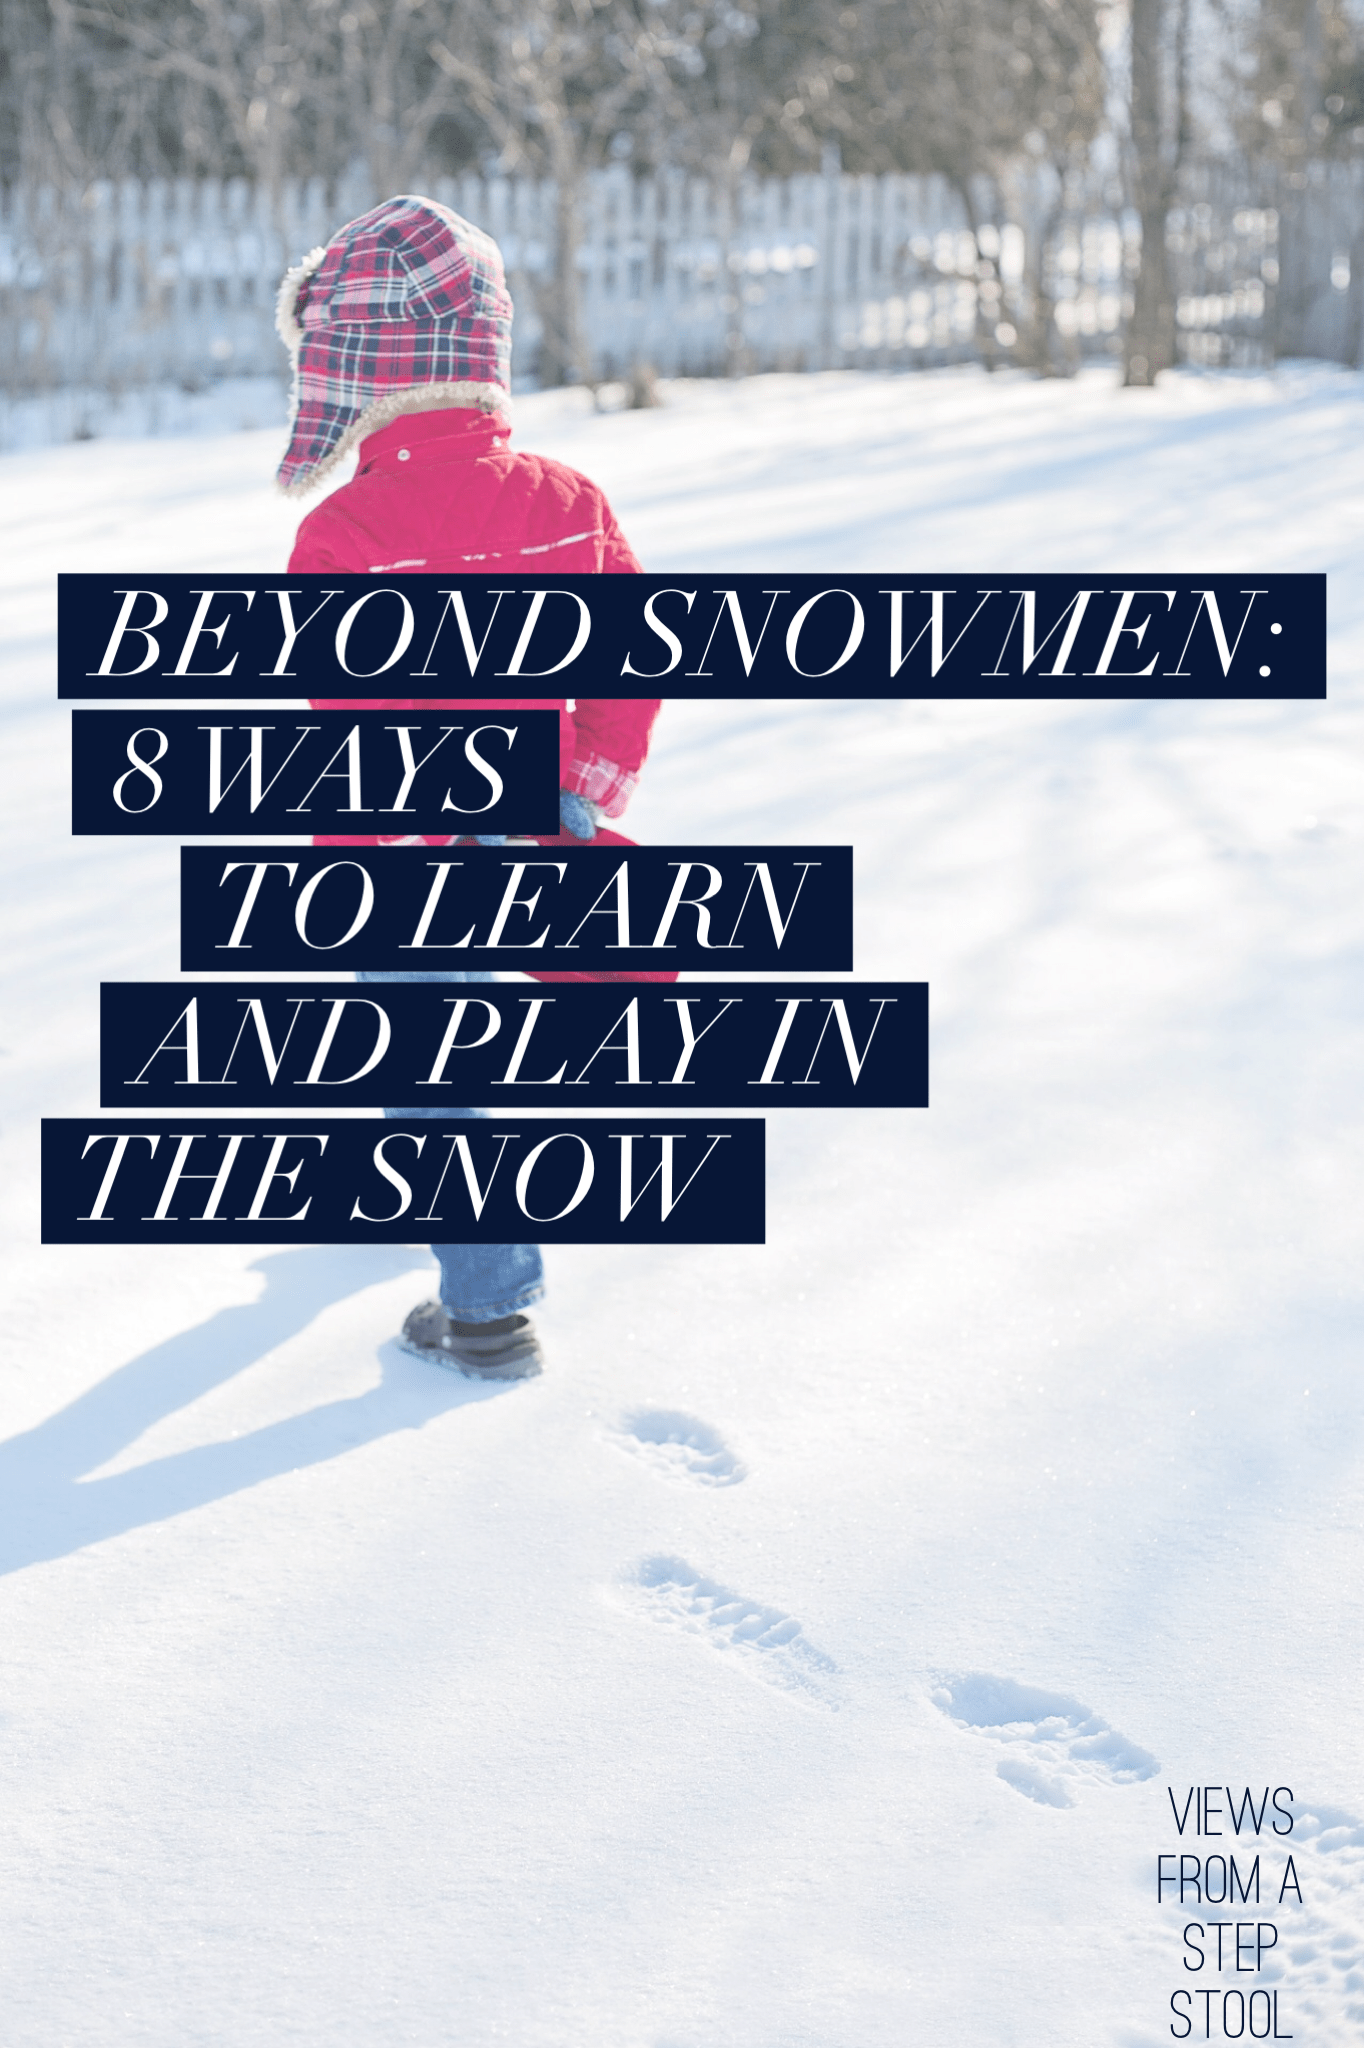 Alternative fun and educational activities using SNOW!